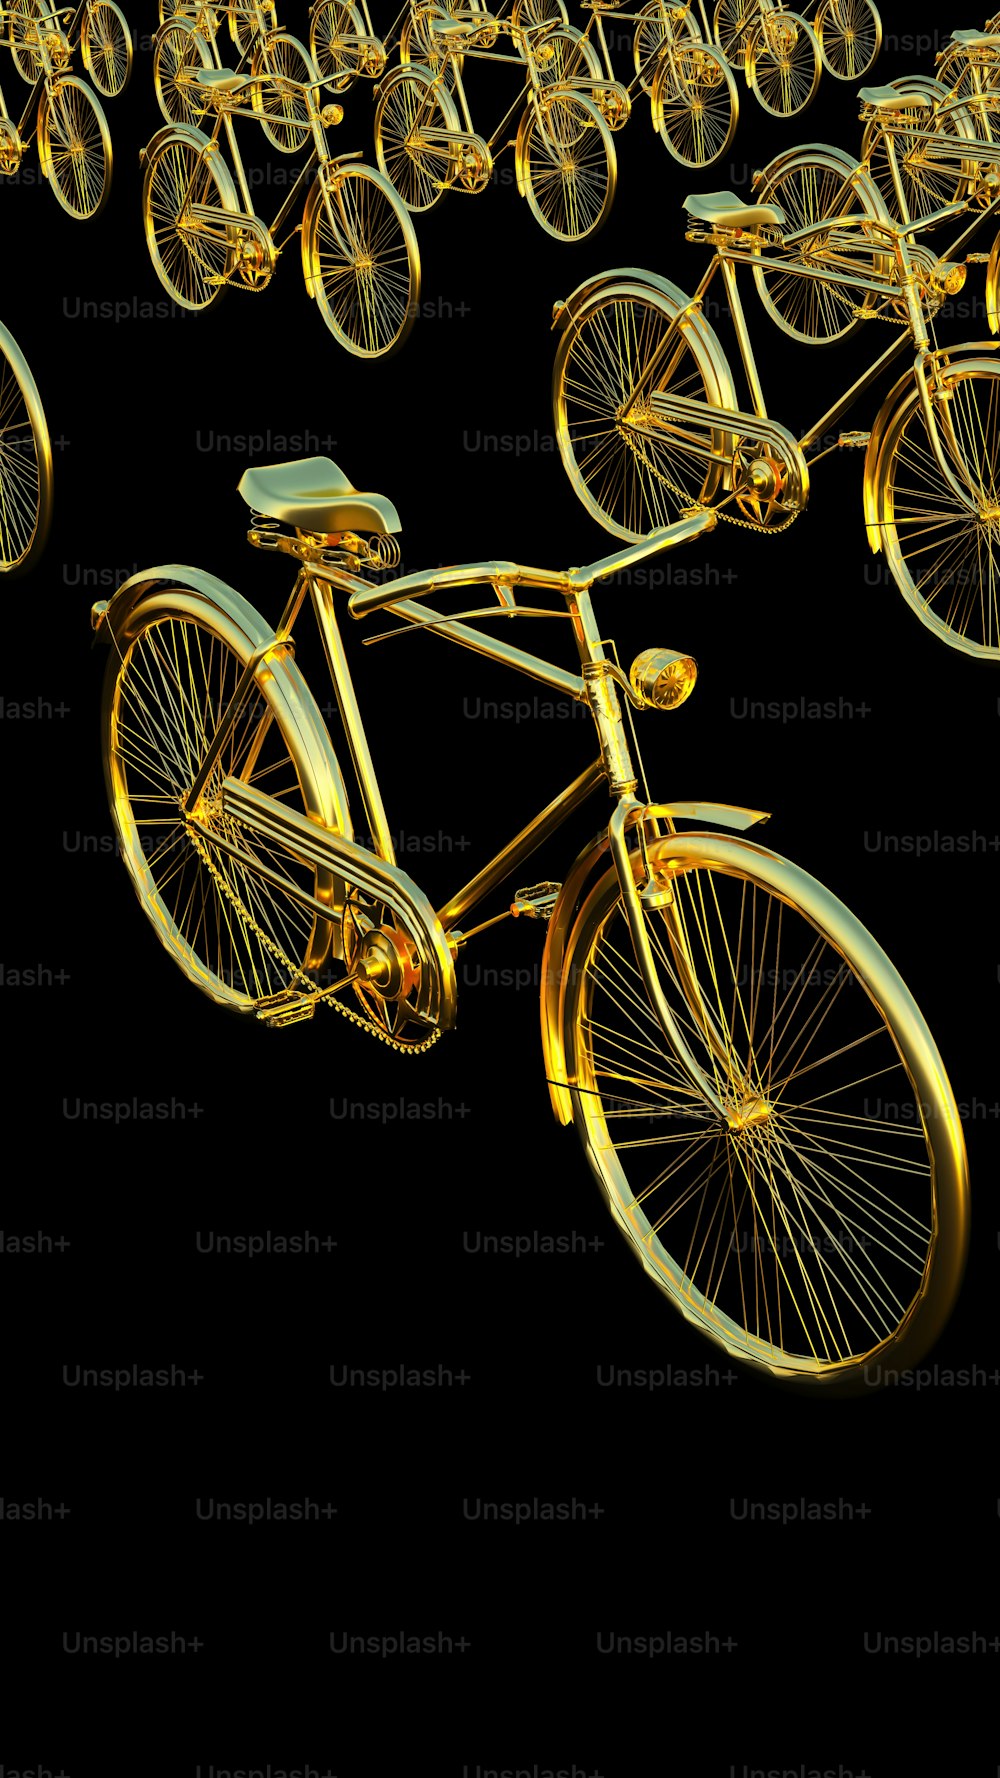 un tas de vélos de couleur or